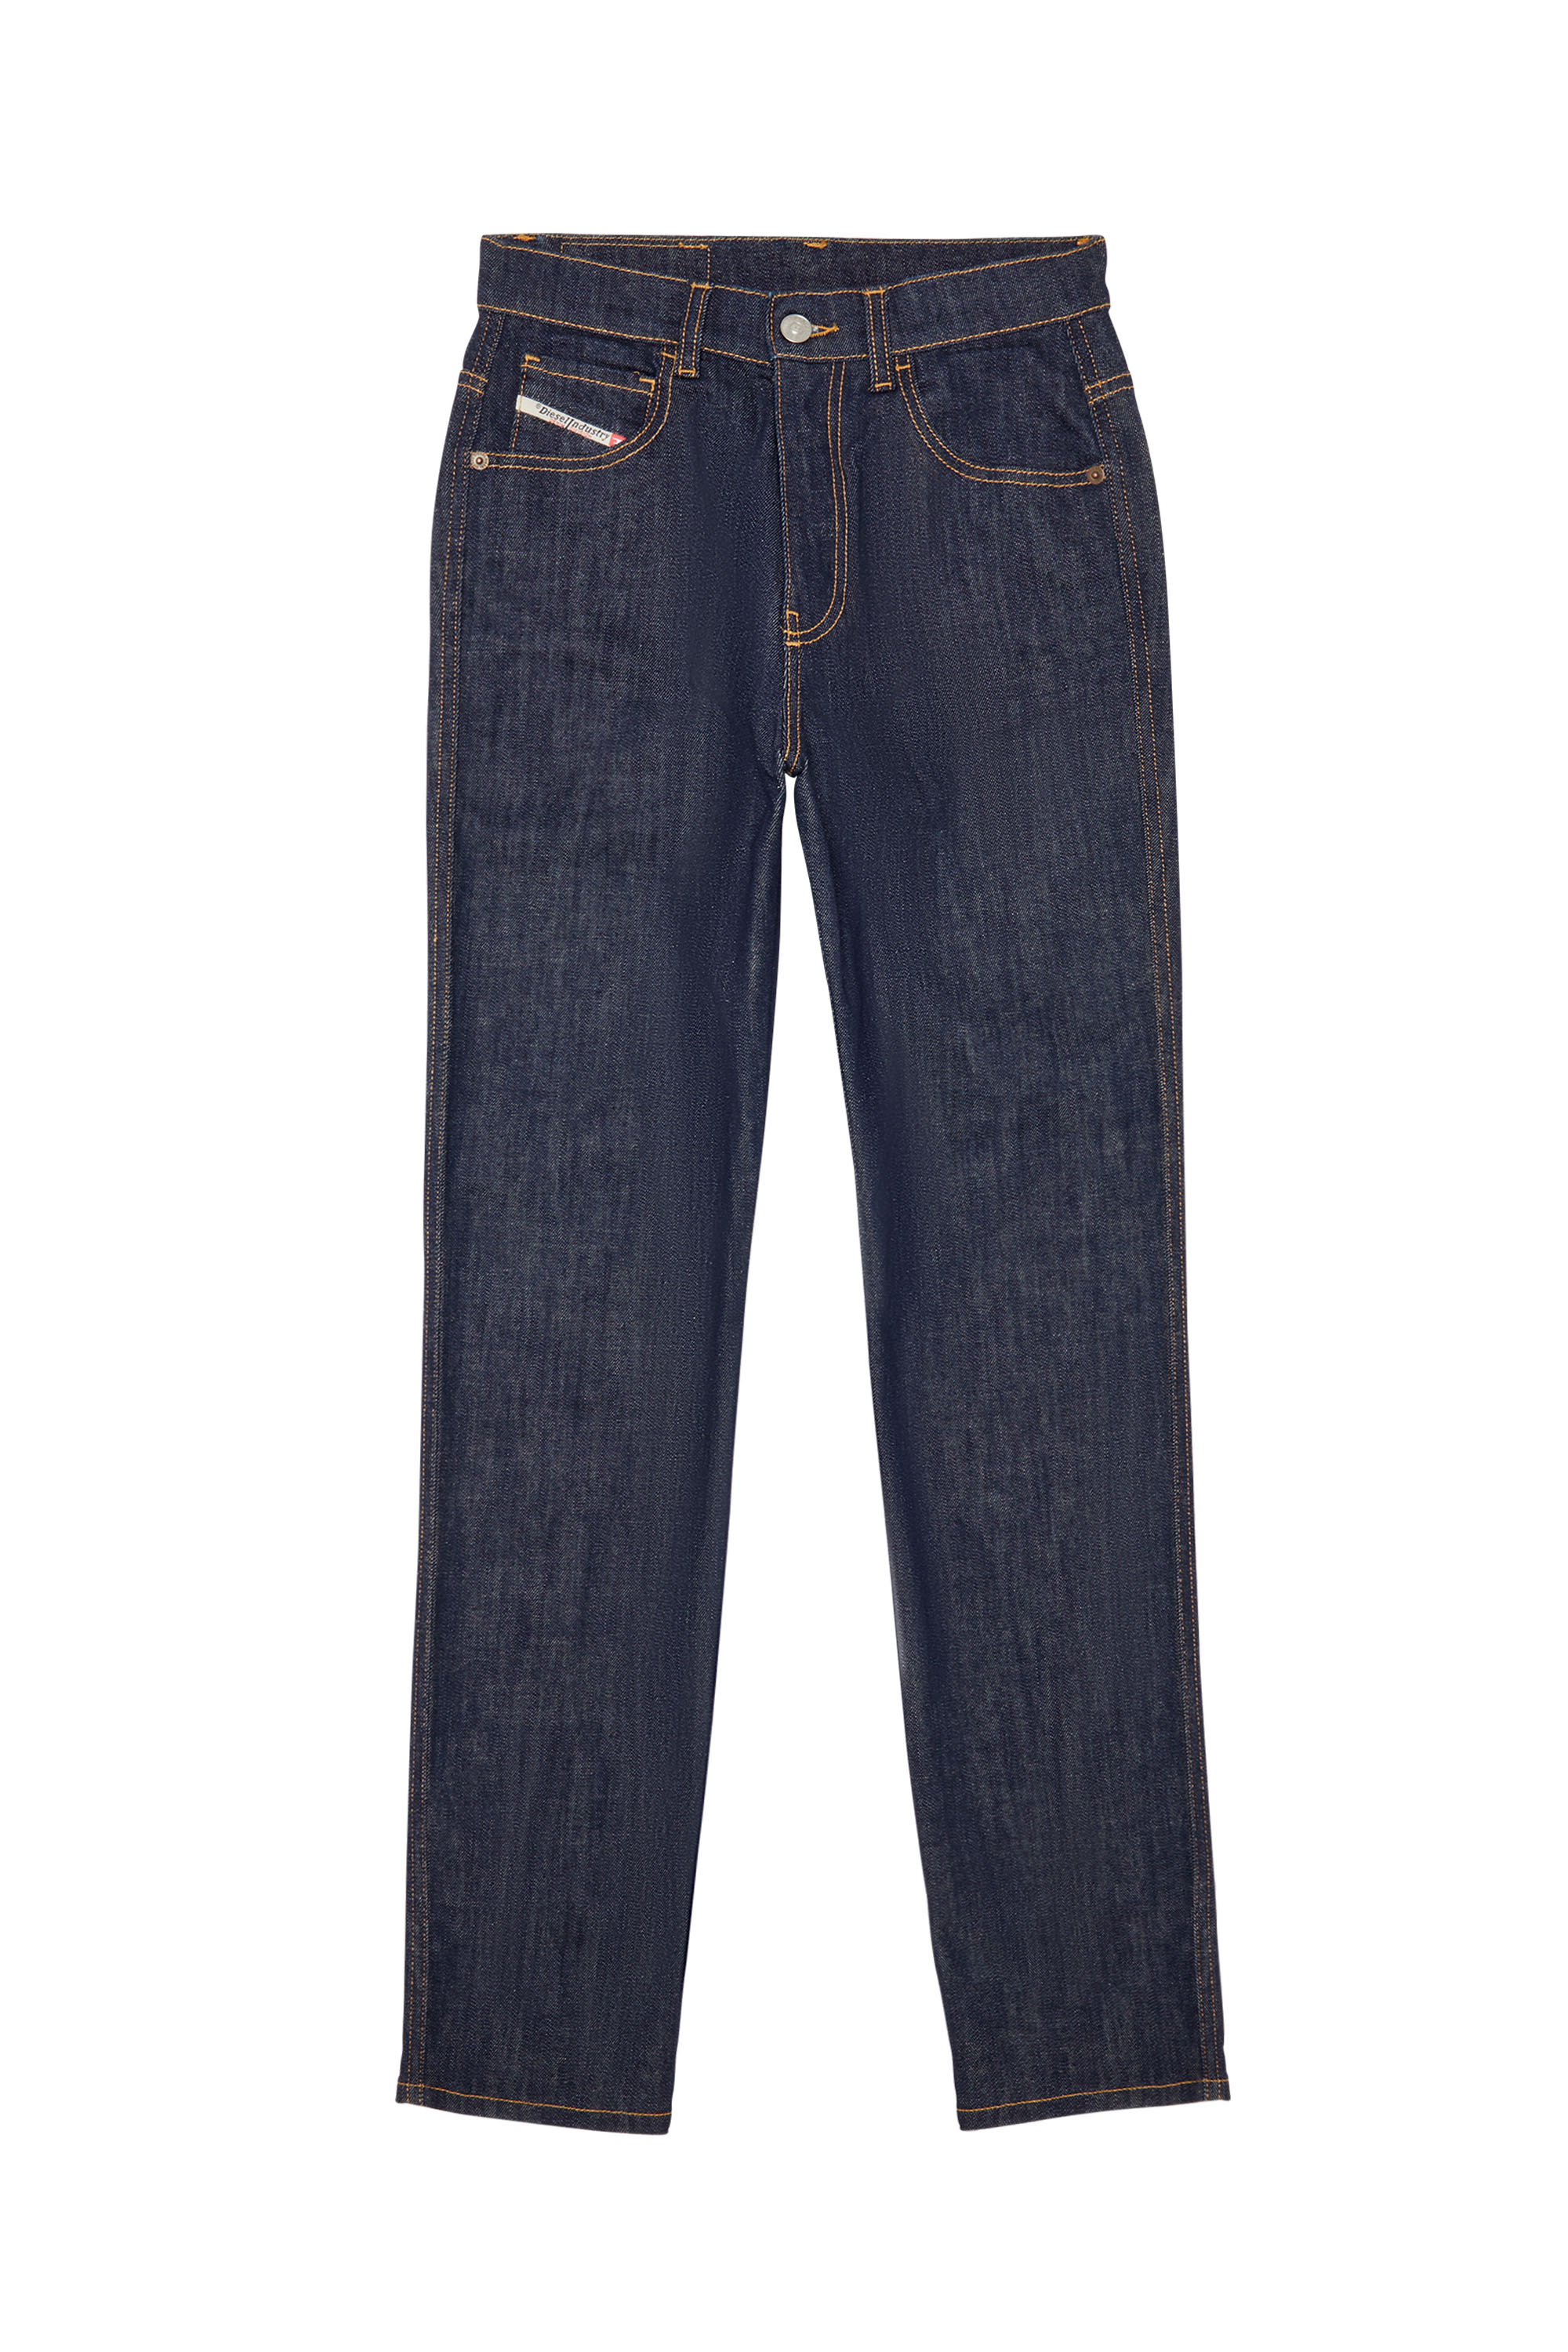 1994 Z9B89 Straight Jeans, Dark Blue - Jeans